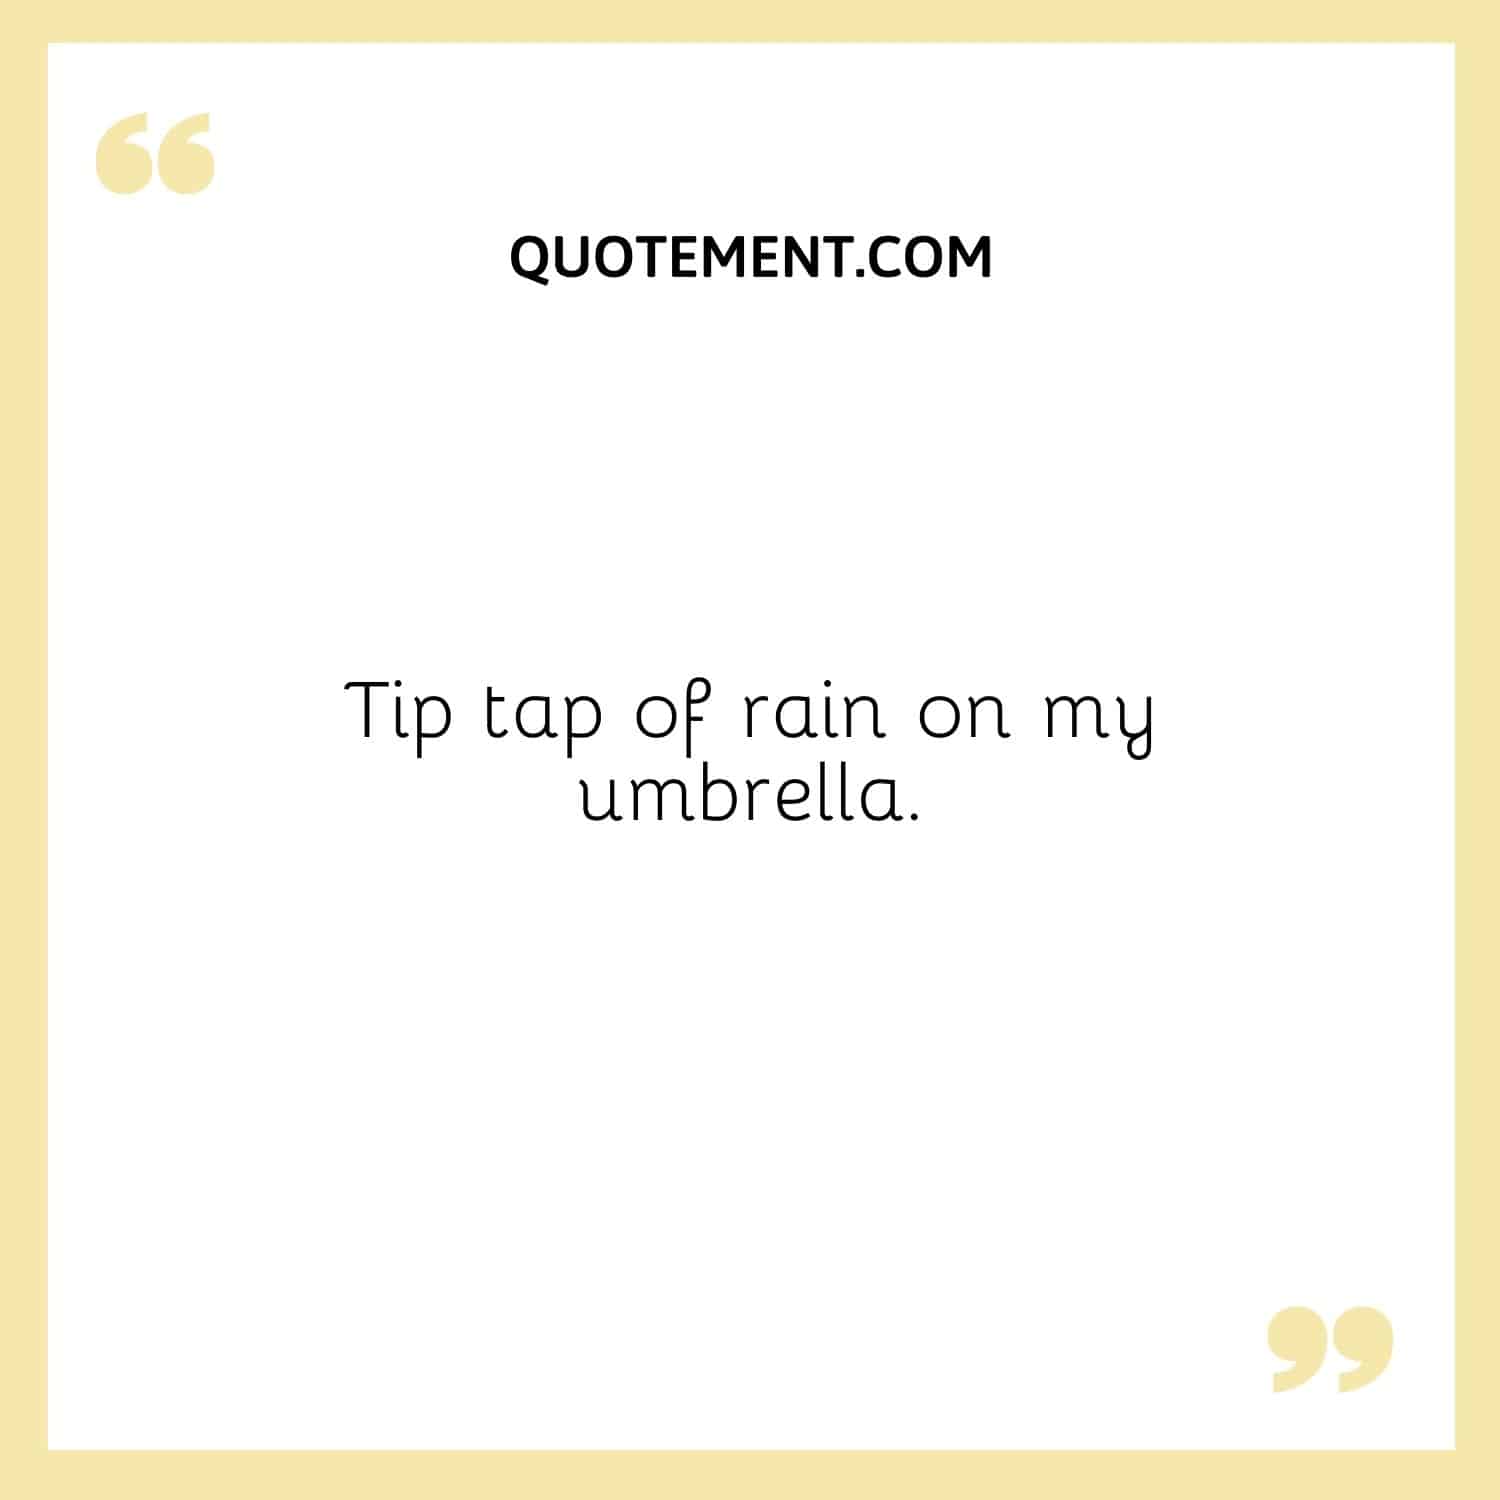 Tip tap of rain on my umbrella.